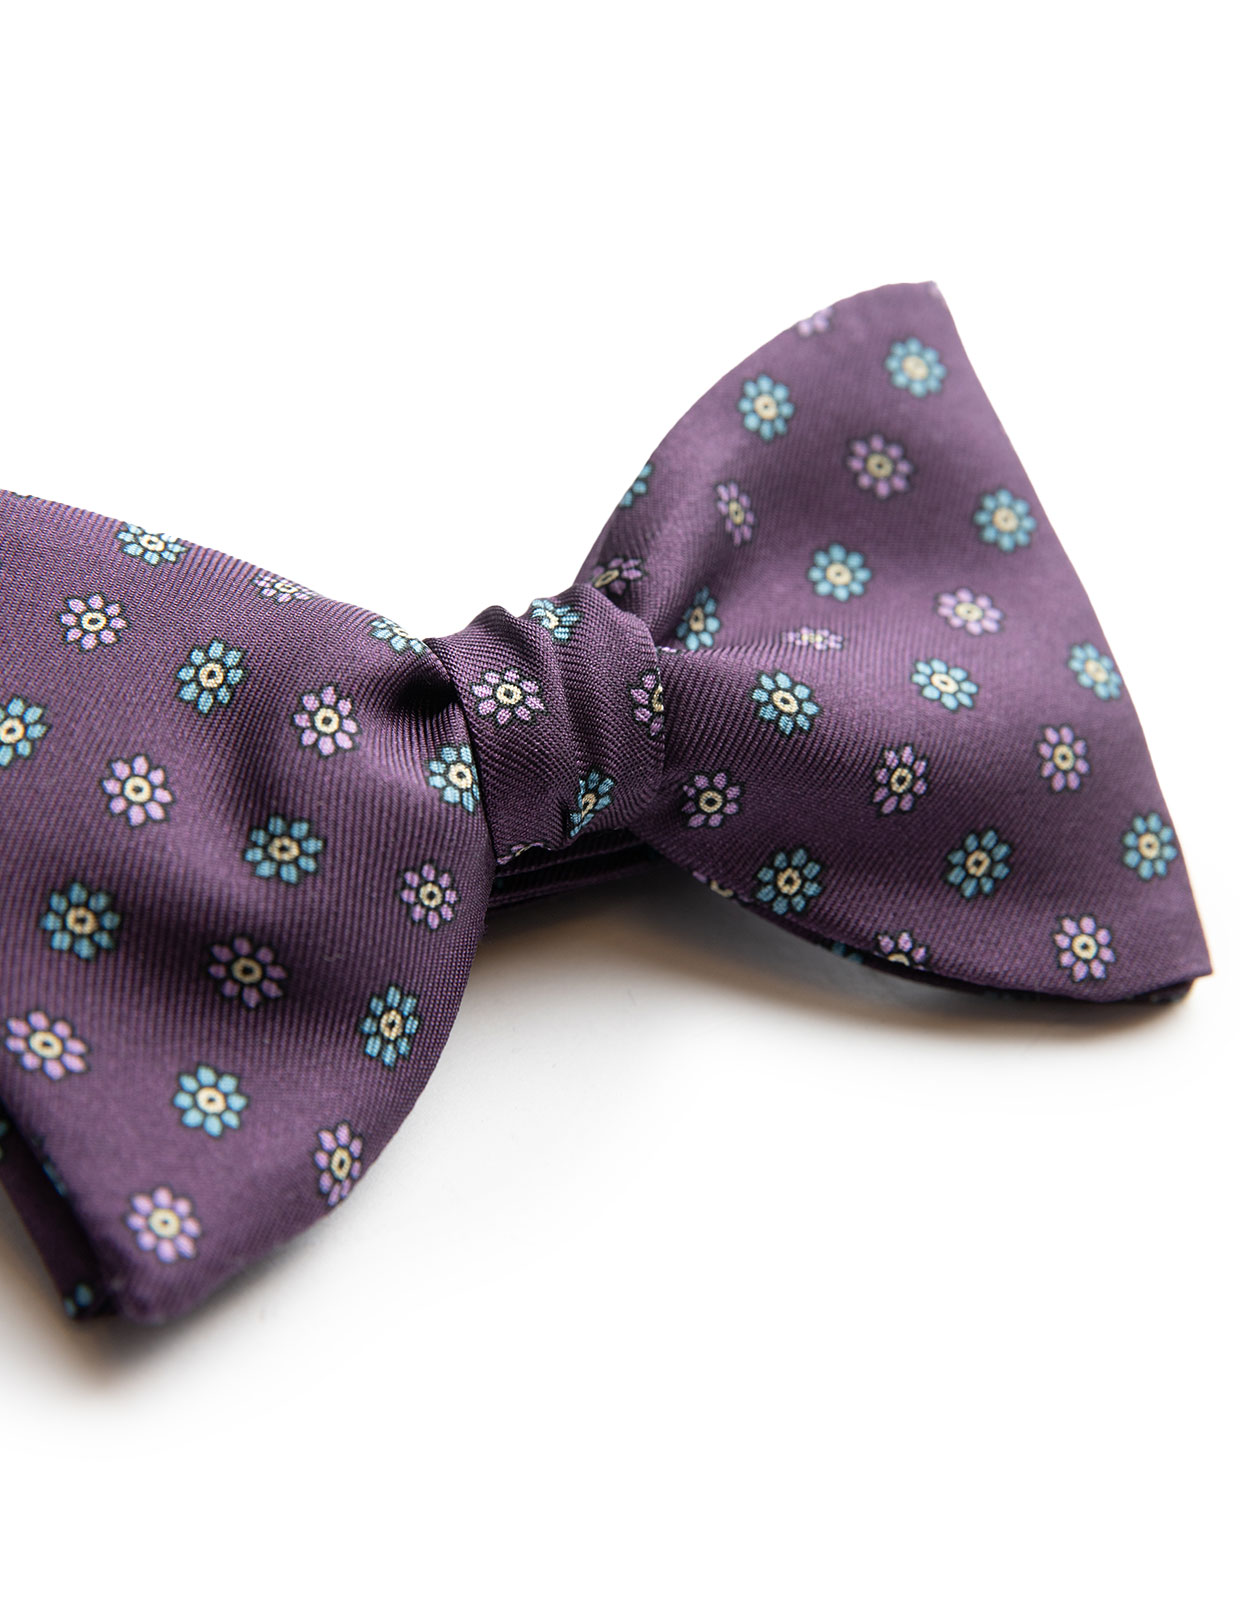 Silk Bowtie Printed Purple/Flowers